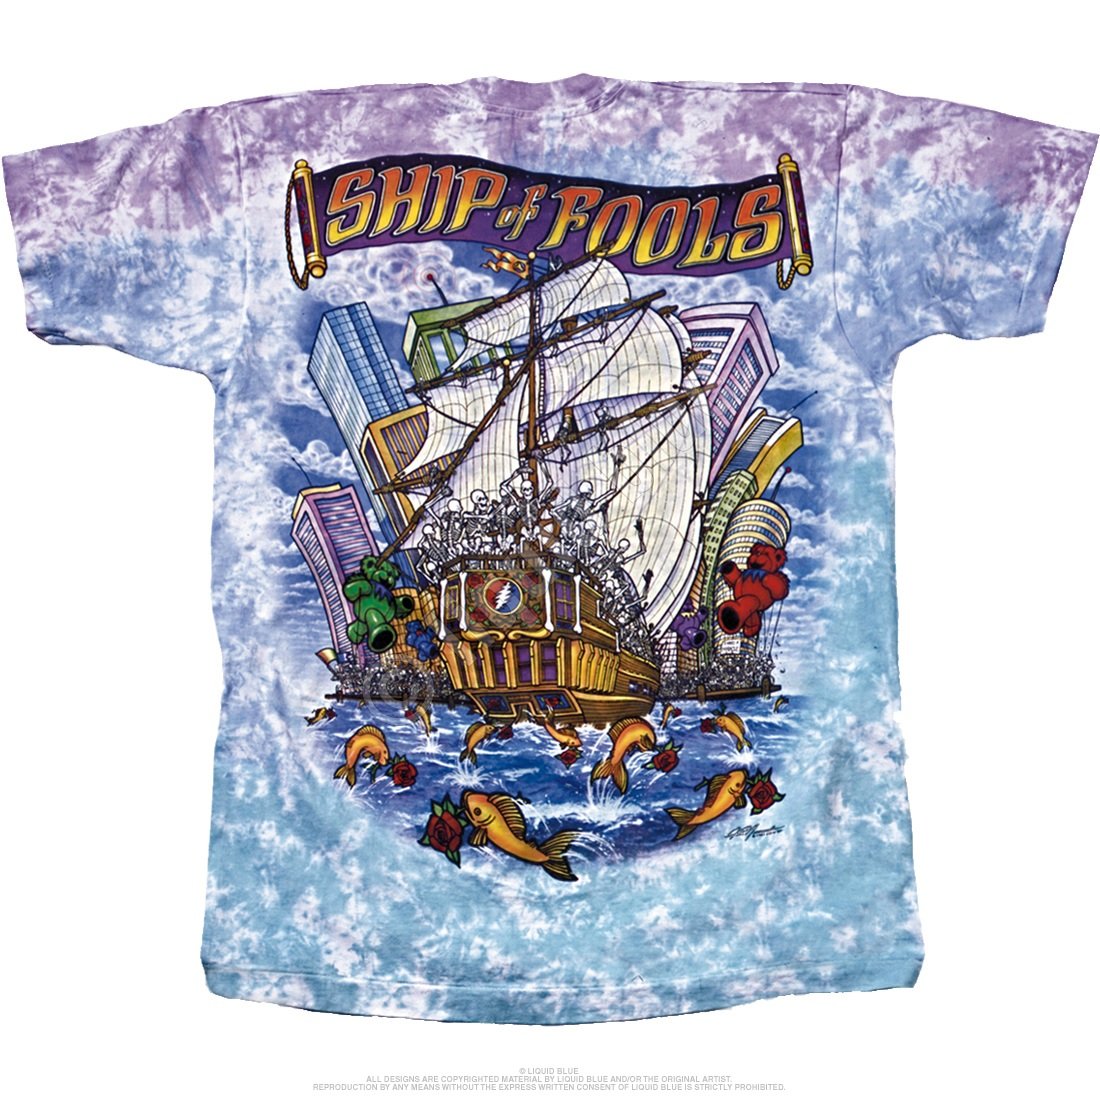 Liquid Blue Men's Grateful Dead Ship of Fools Tie Dye Short Sleeve T-Shirt